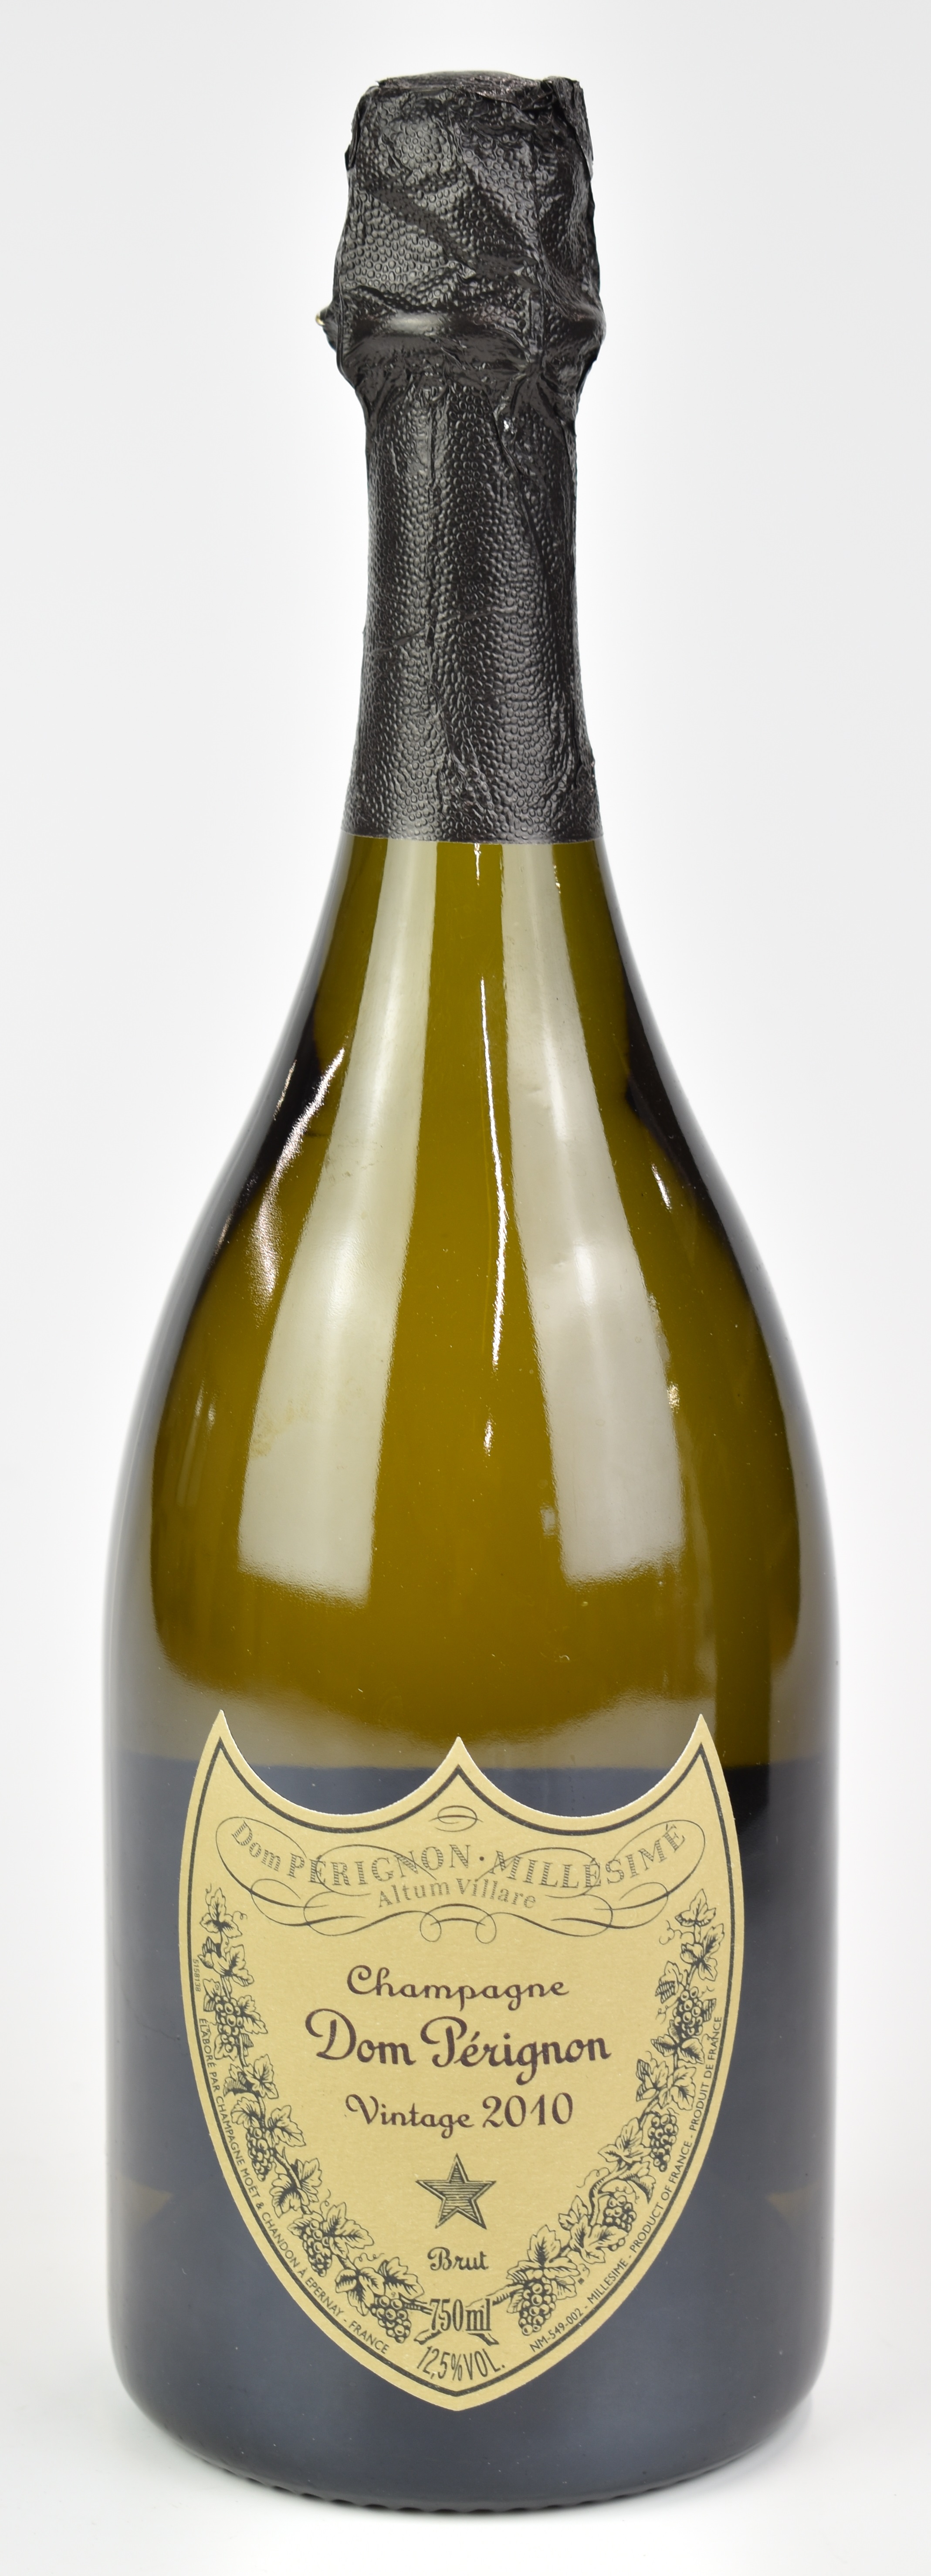 Dom Pérignon Vintage 2010 Champagne, 750ml, 12.5% vol, with presentation box - Image 2 of 5